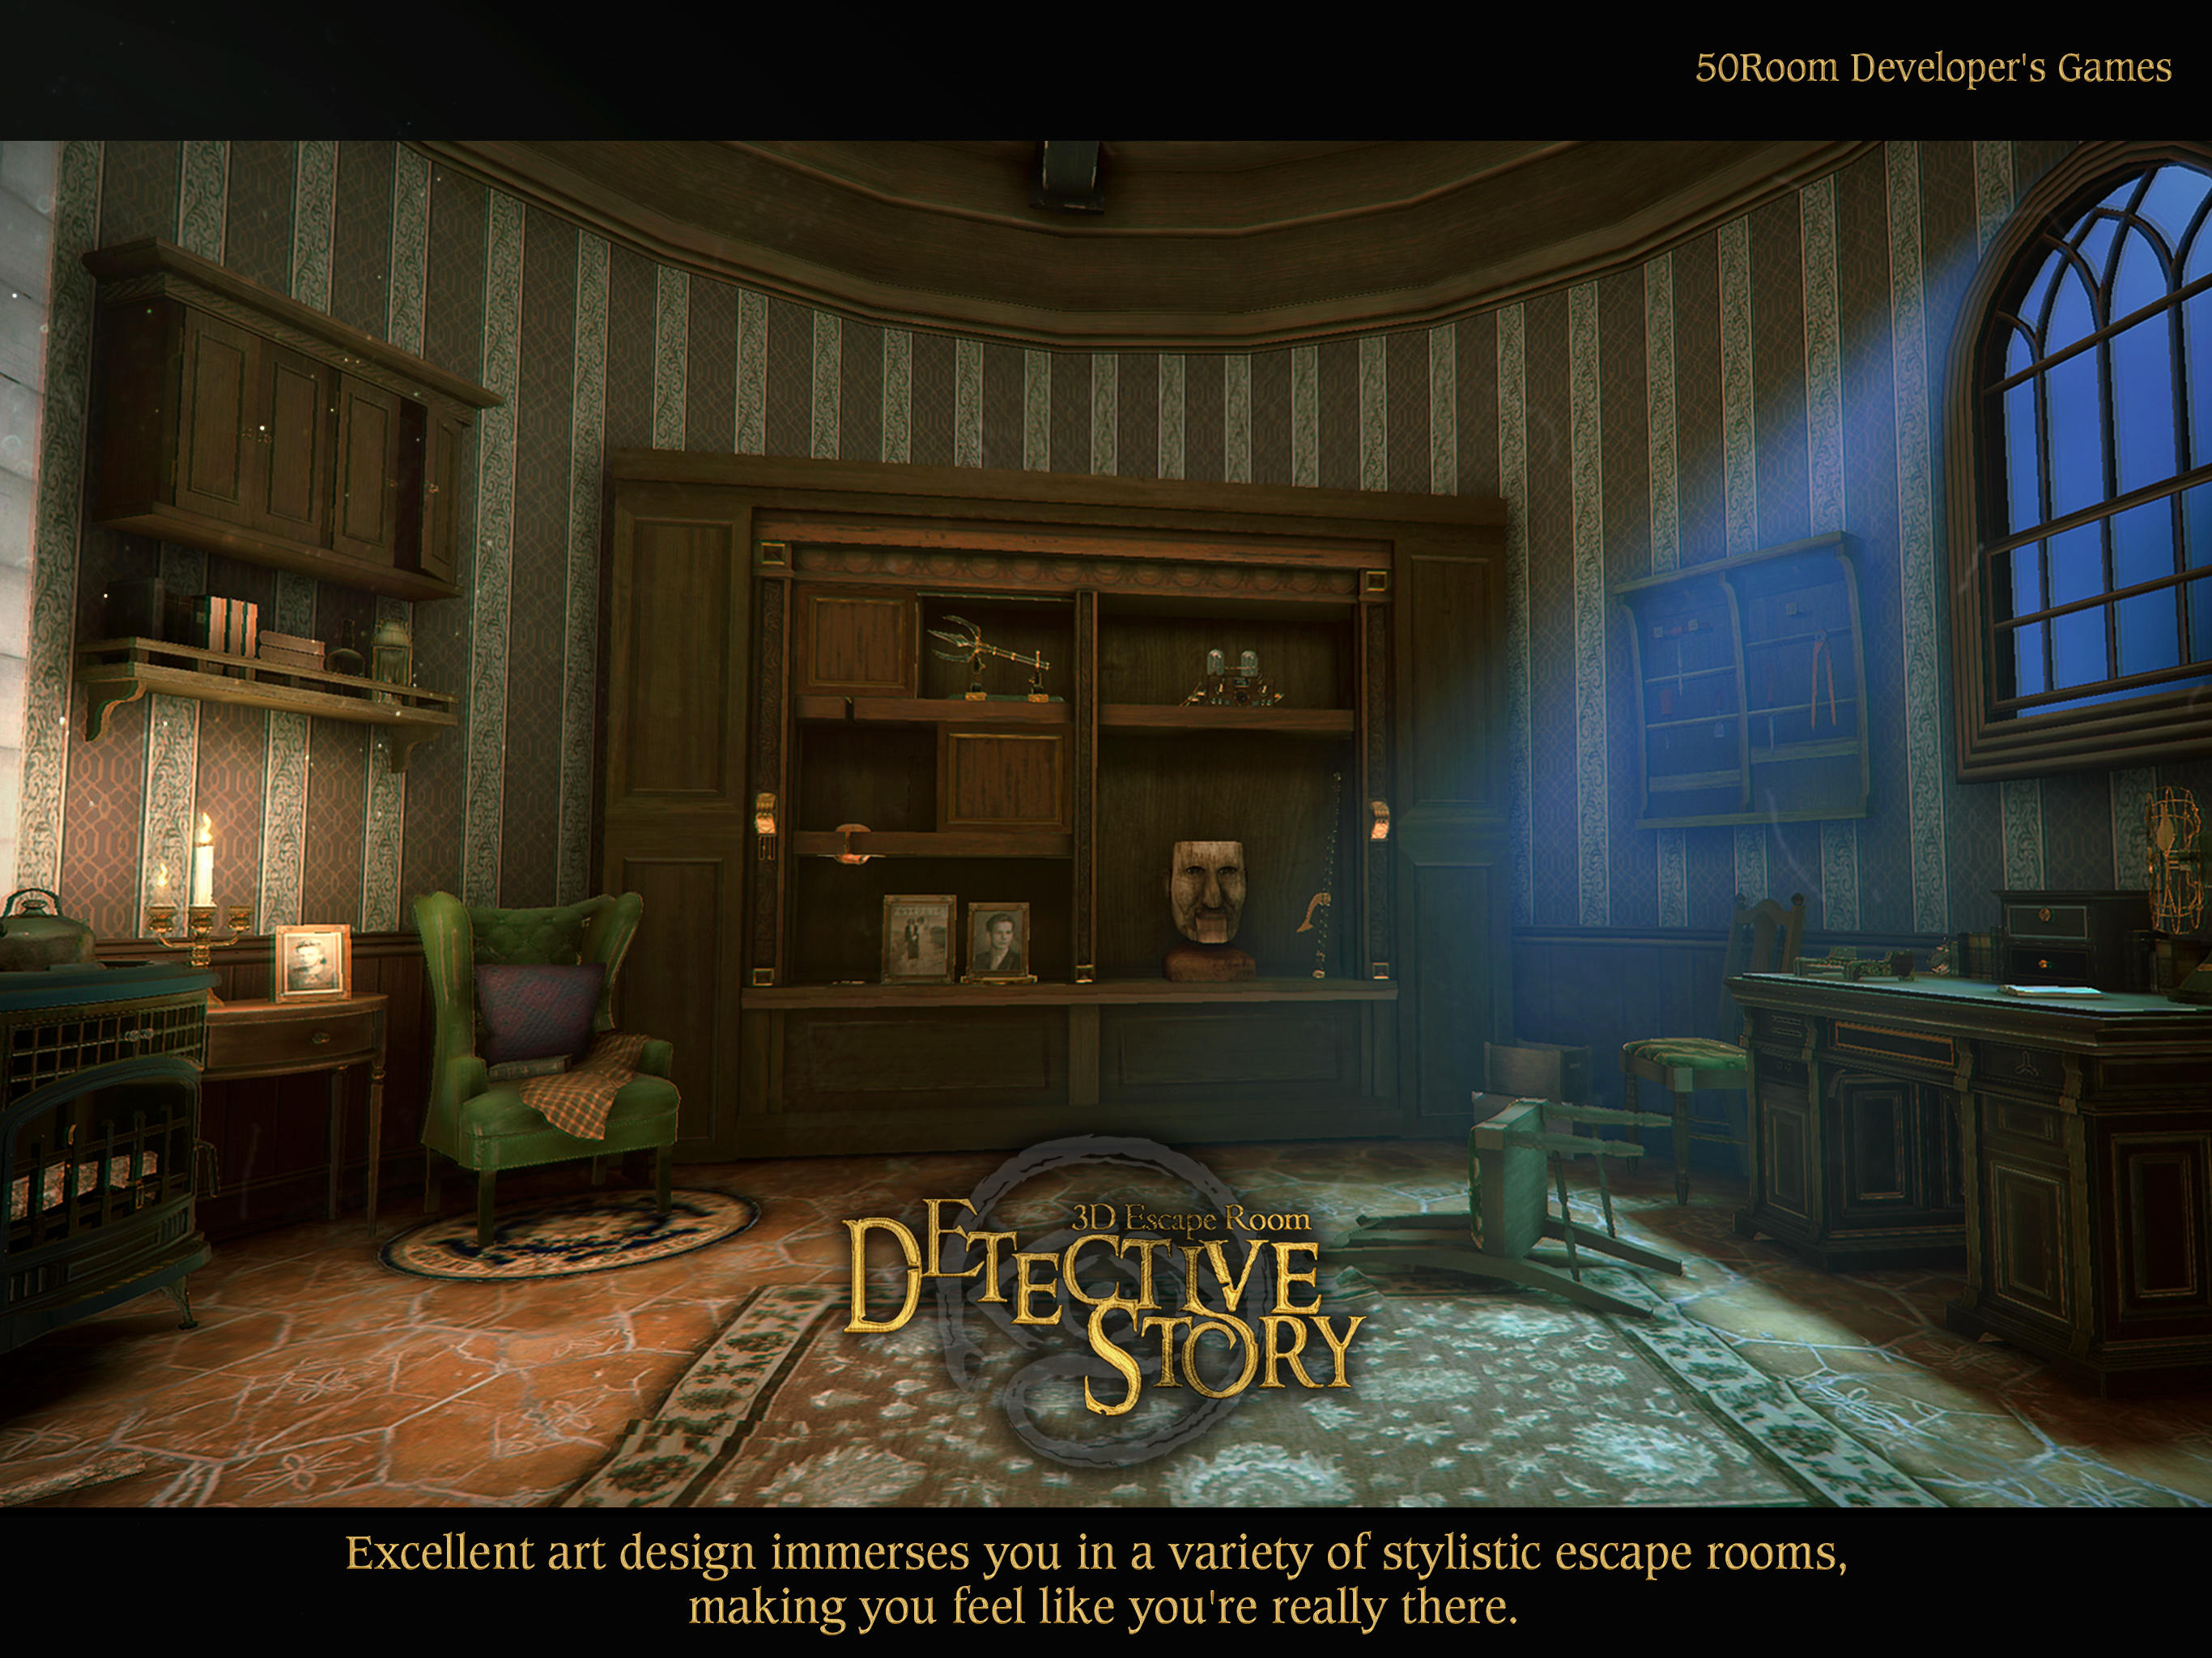 3D Escape Room Detective Story screenshot game